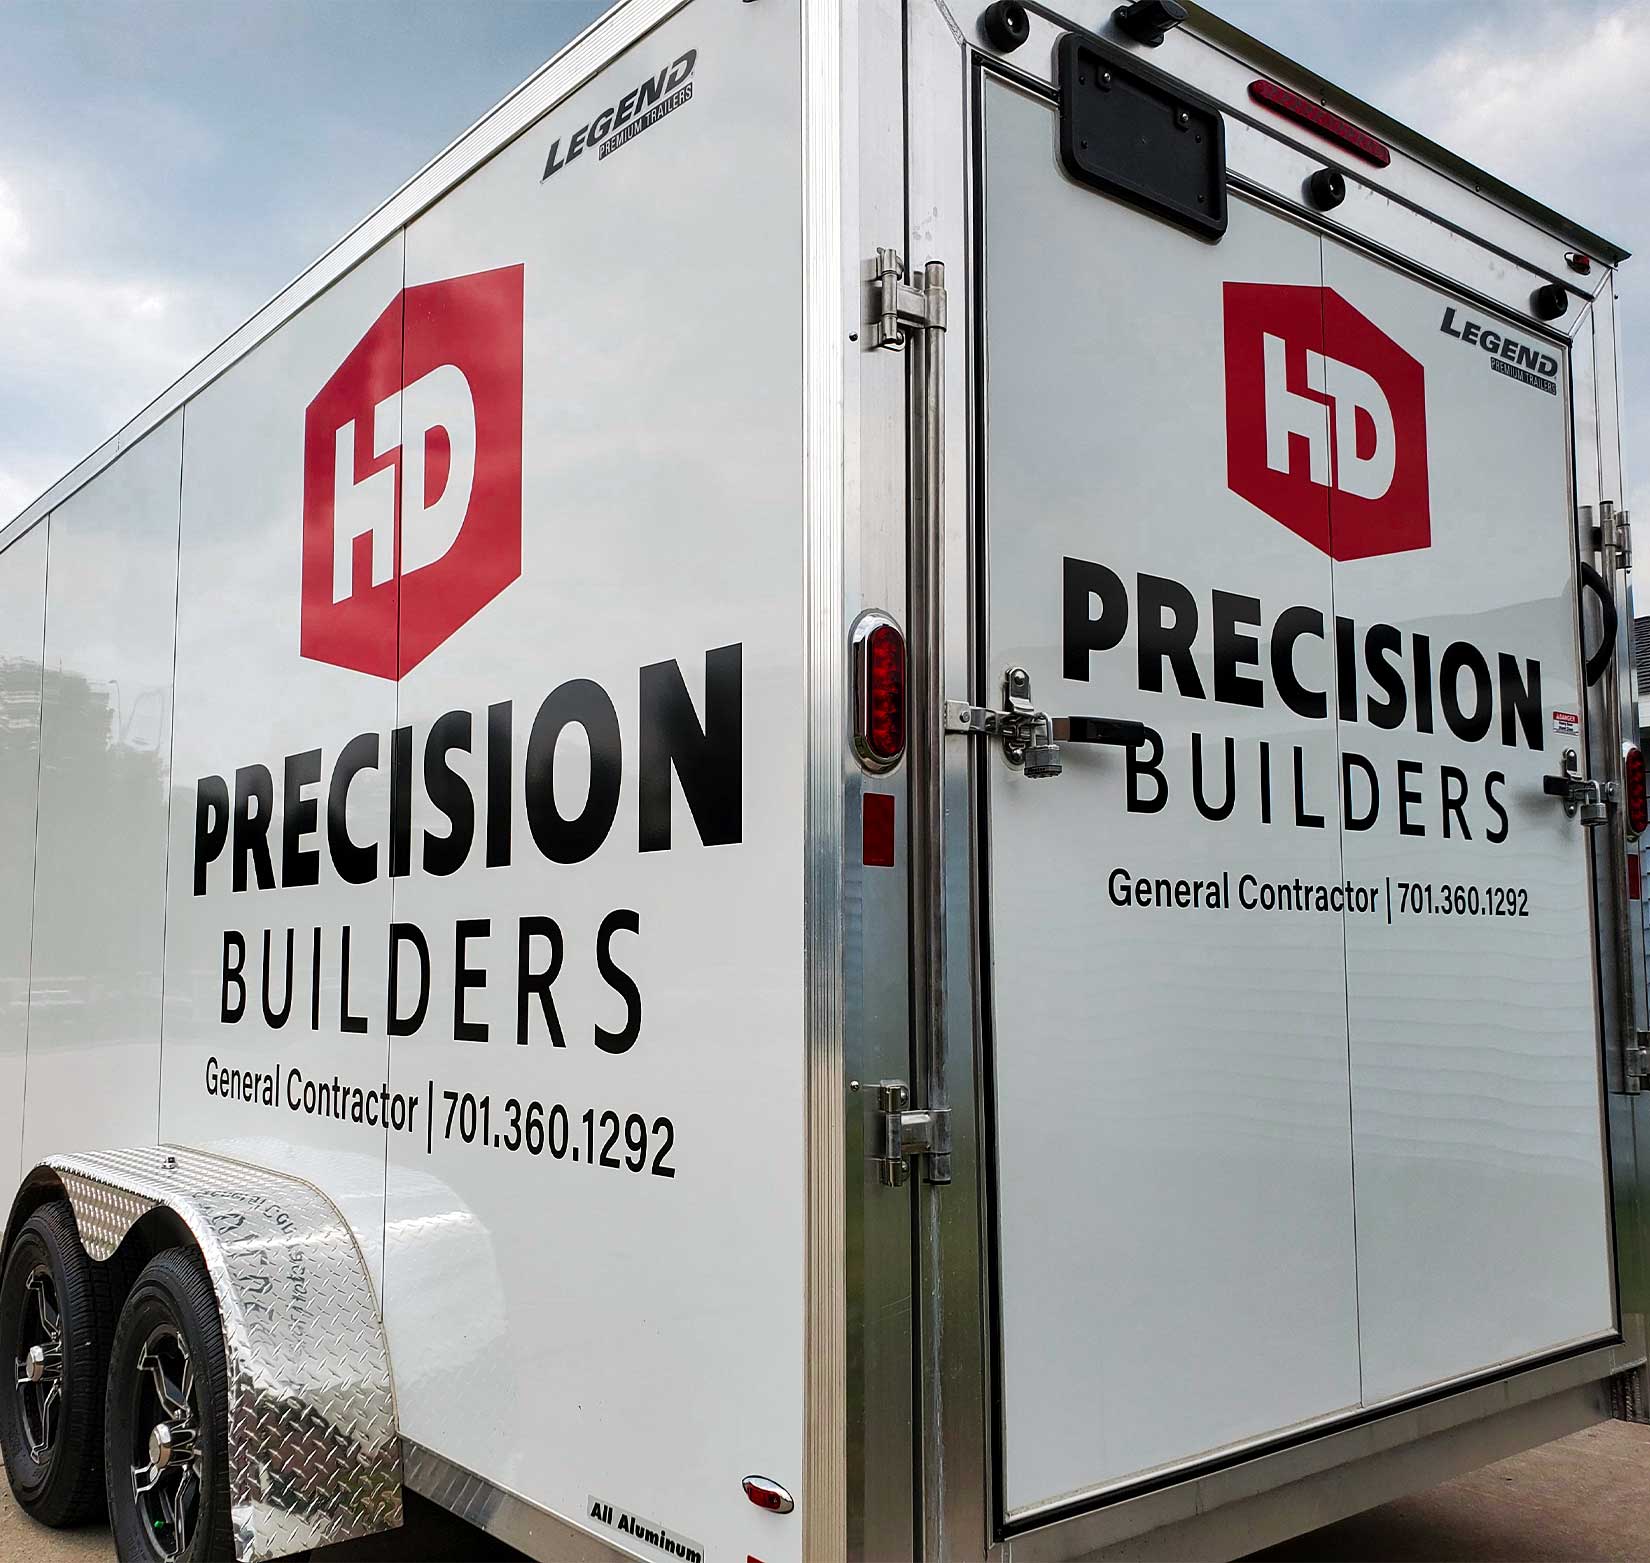 Vinyl lettering on a white trailer for Precision Builders